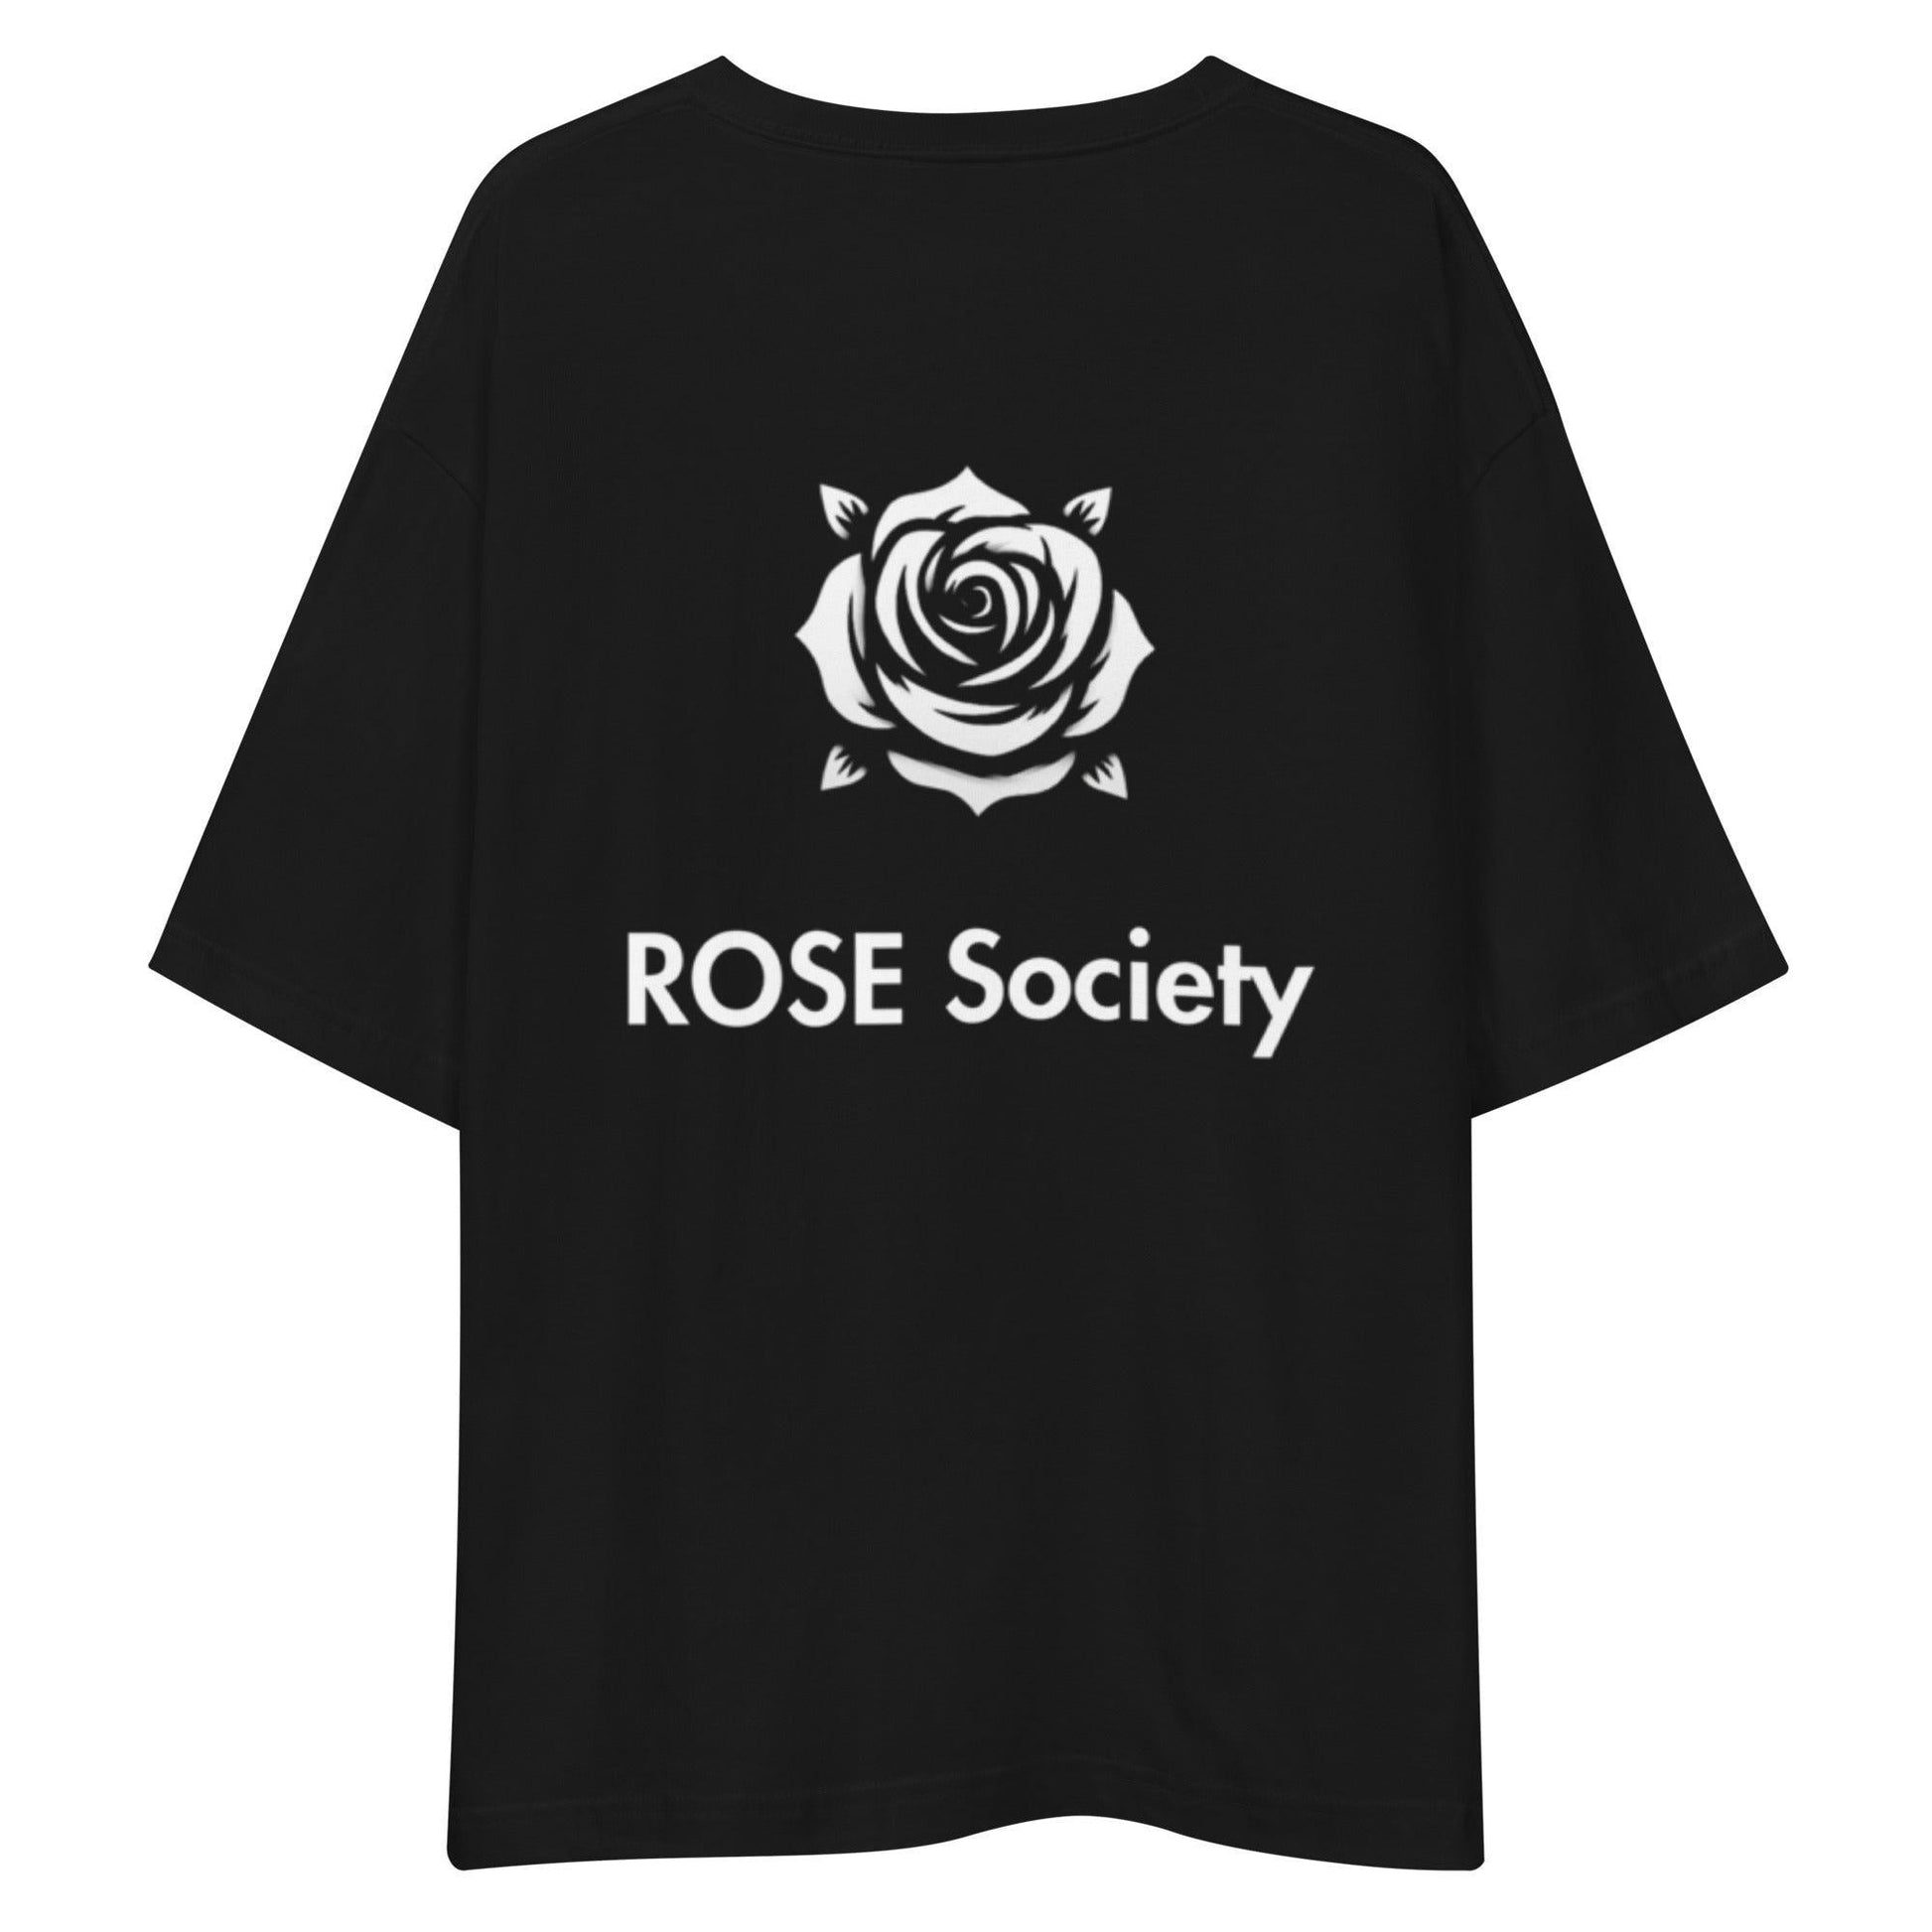 FUNDAMENTAL Monochrome T-Shirt Black - ROSE Society